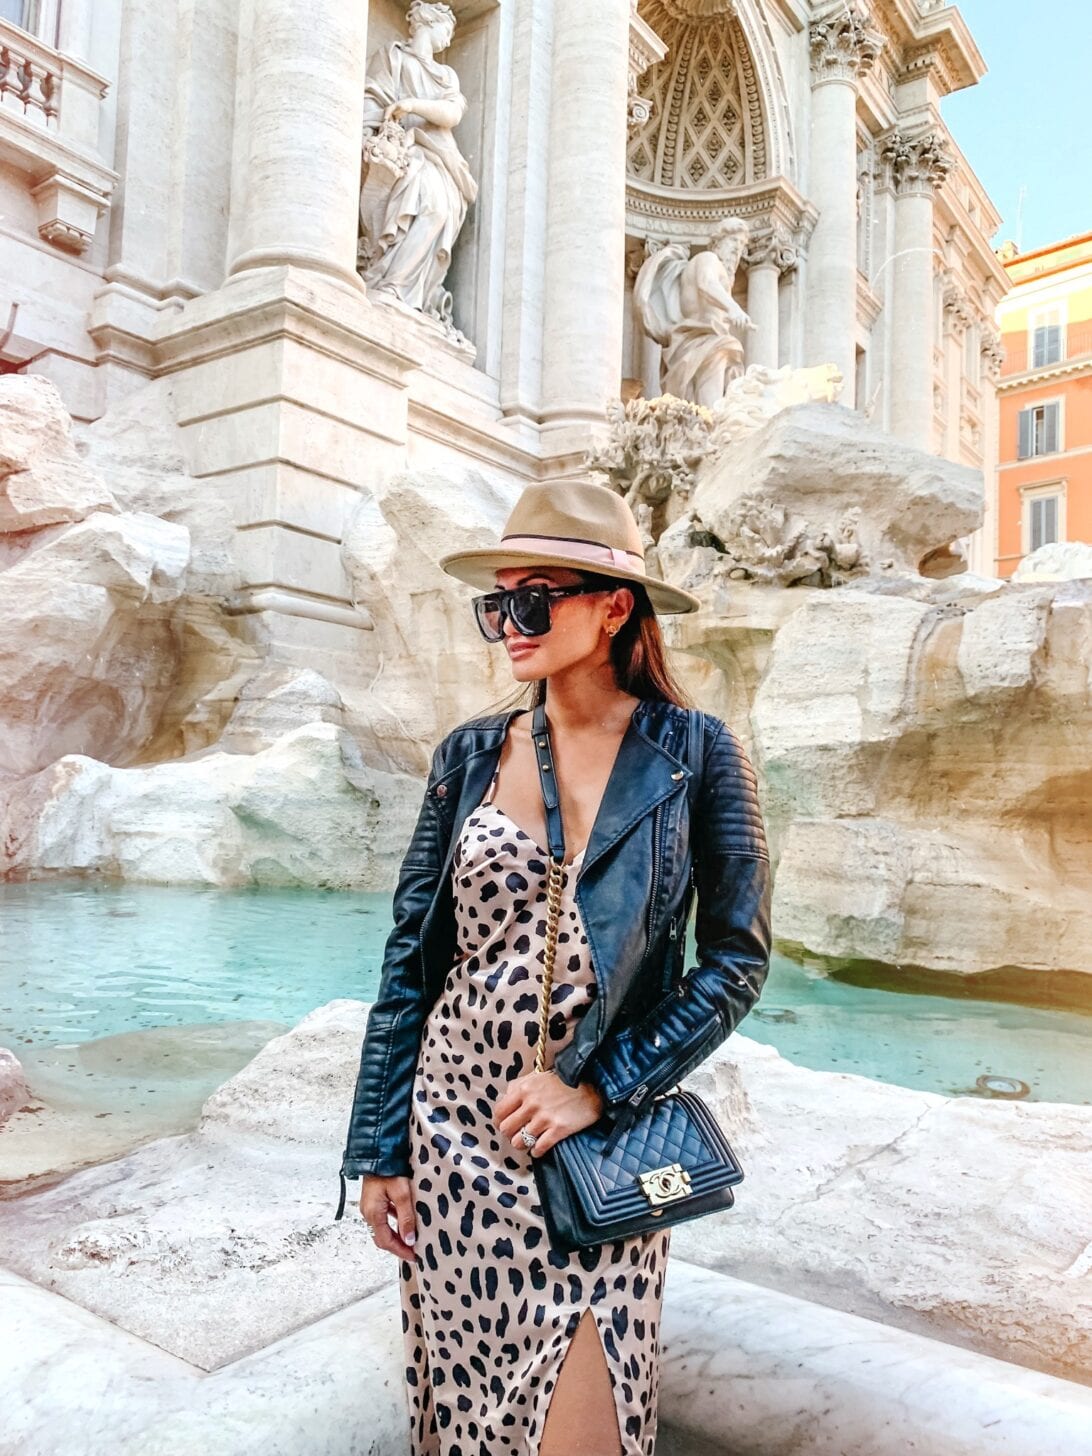 Trevi fountain, best Instagram shot in Rome